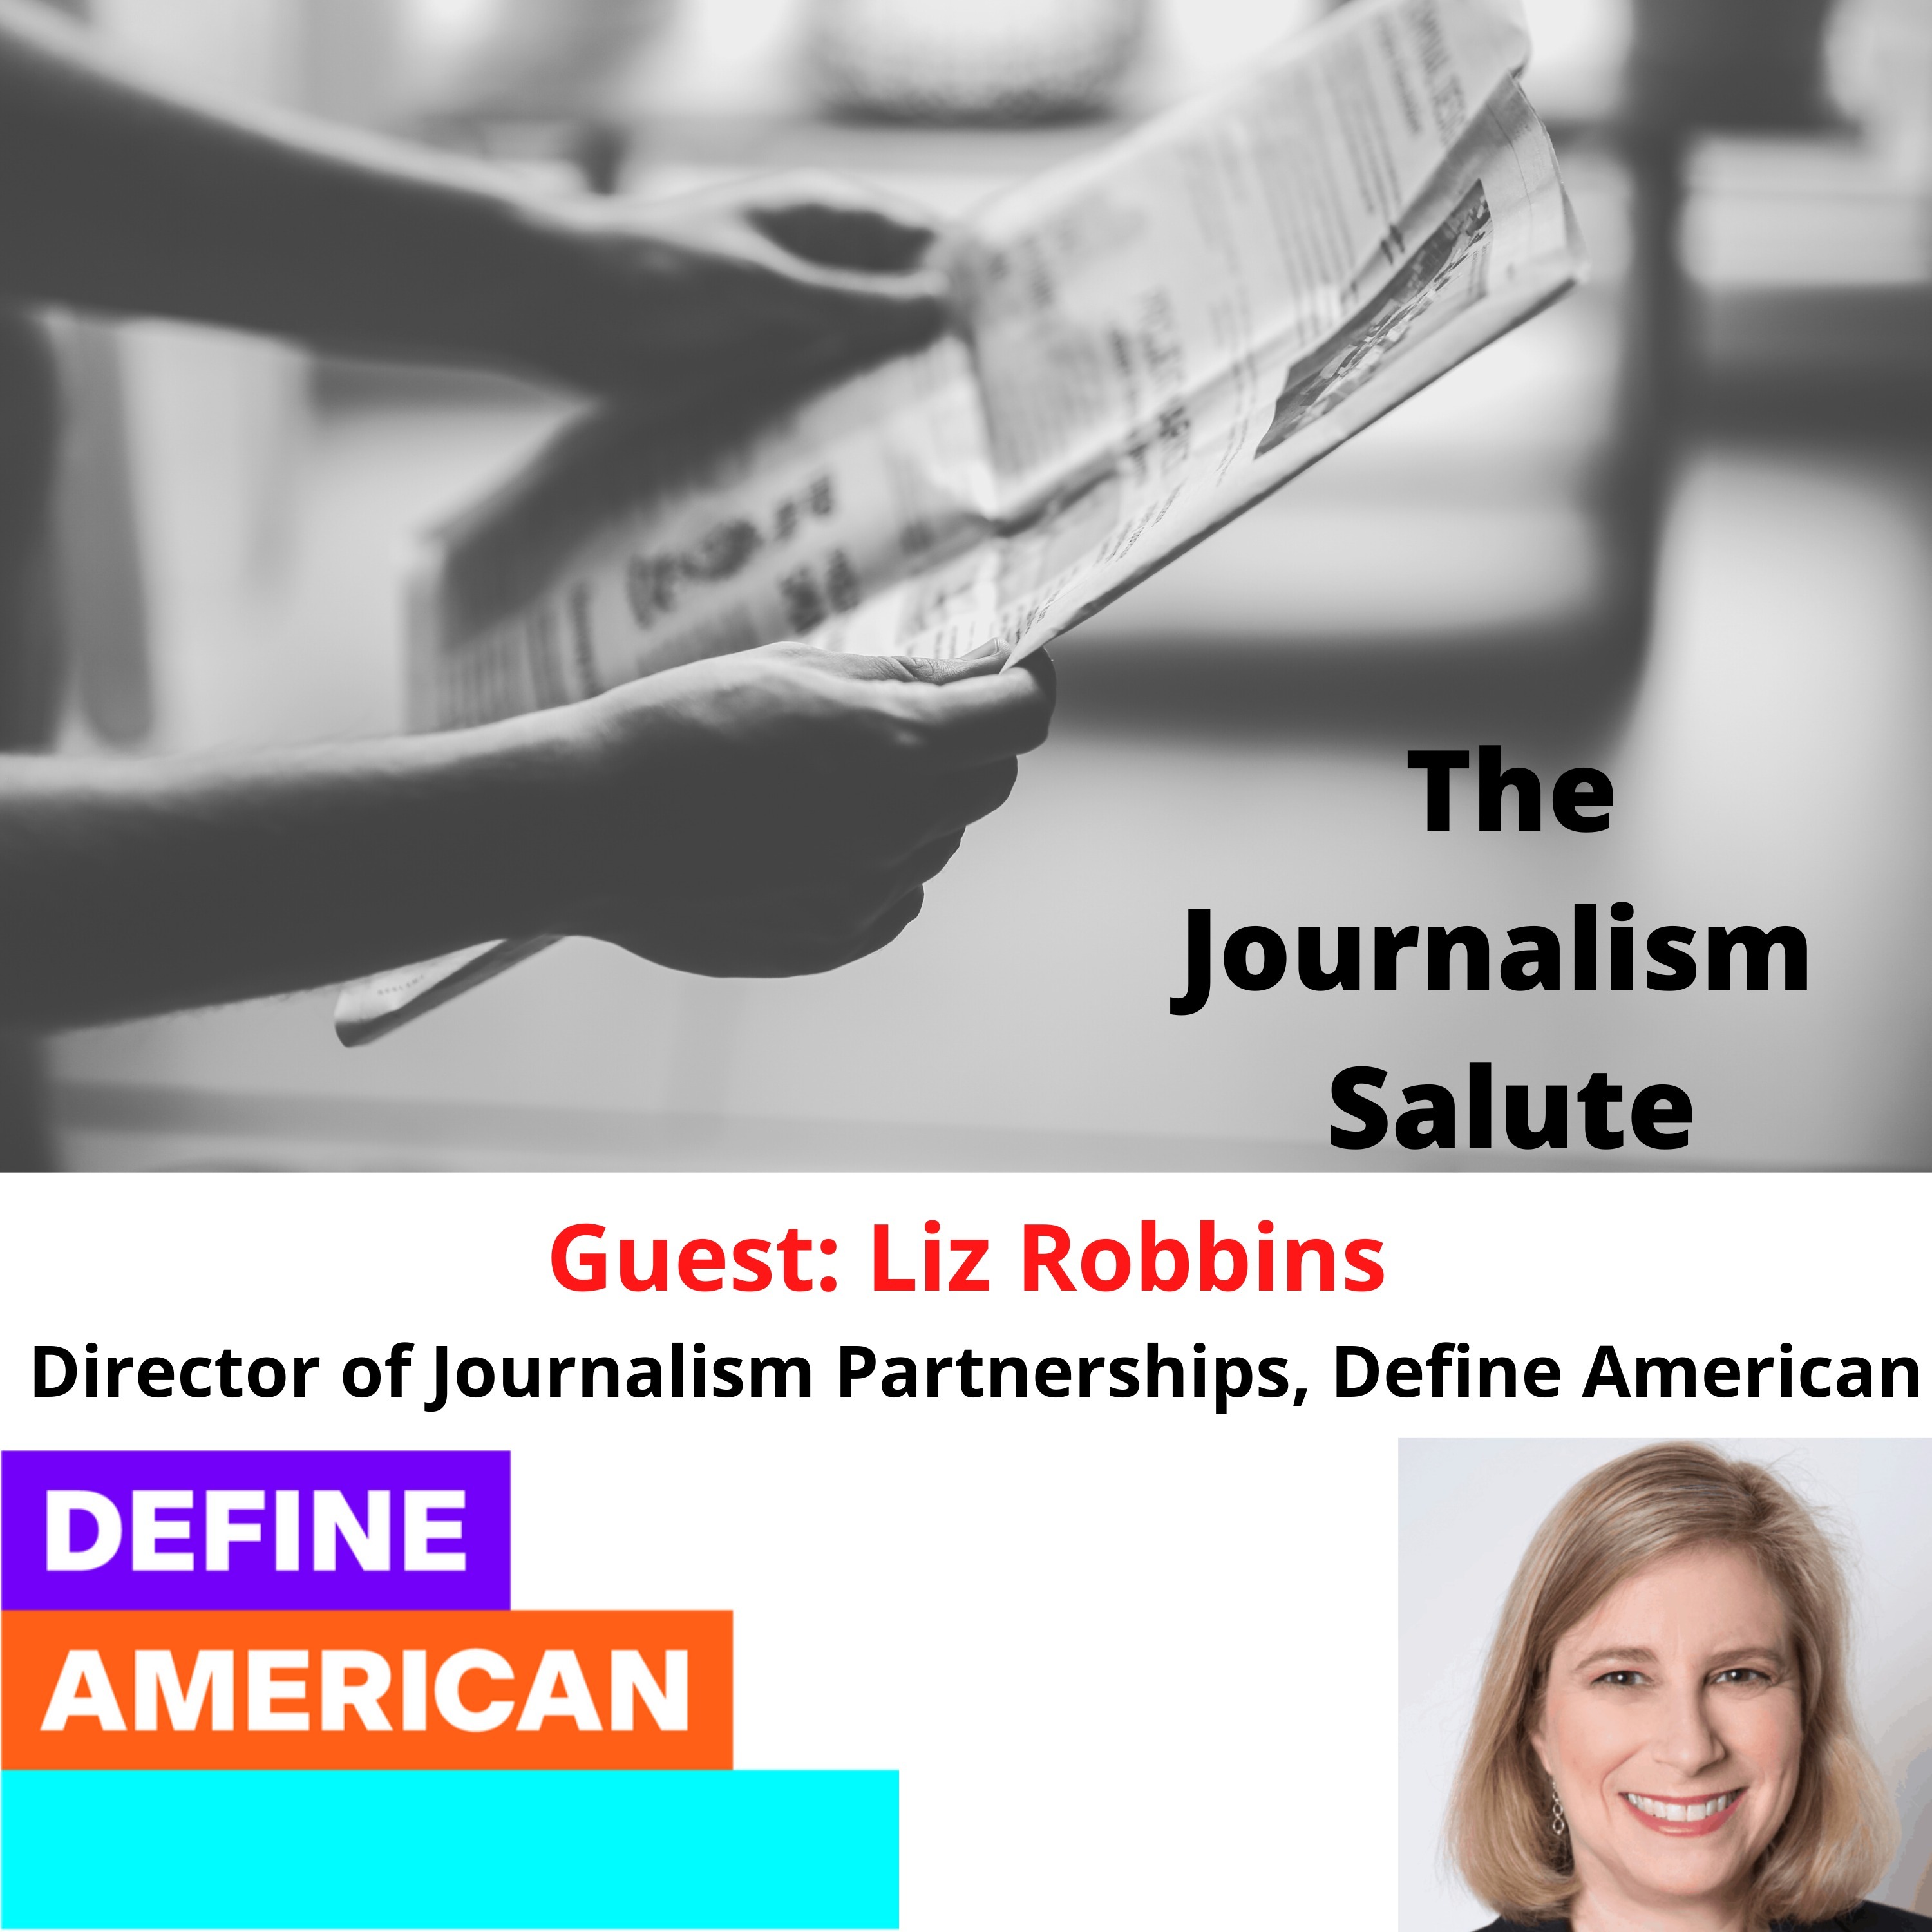 Liz Robbins, Director of Journalism Partnerships at Define American